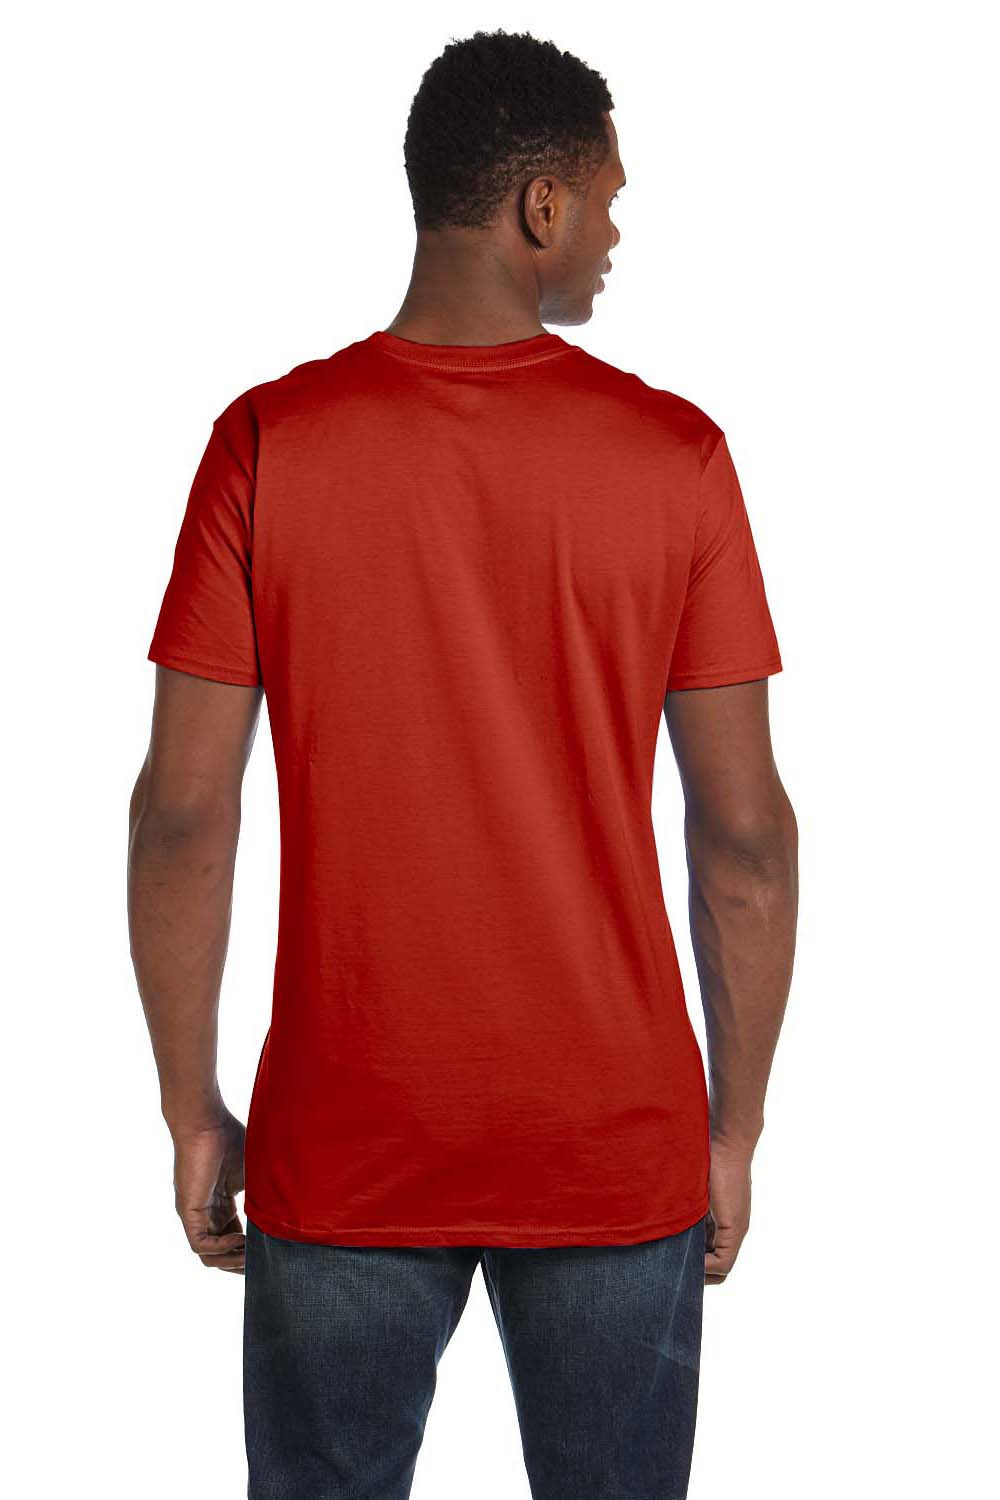 Hanes 4980 Mens Nano-T Short Sleeve Crewneck T-Shirt Red Back